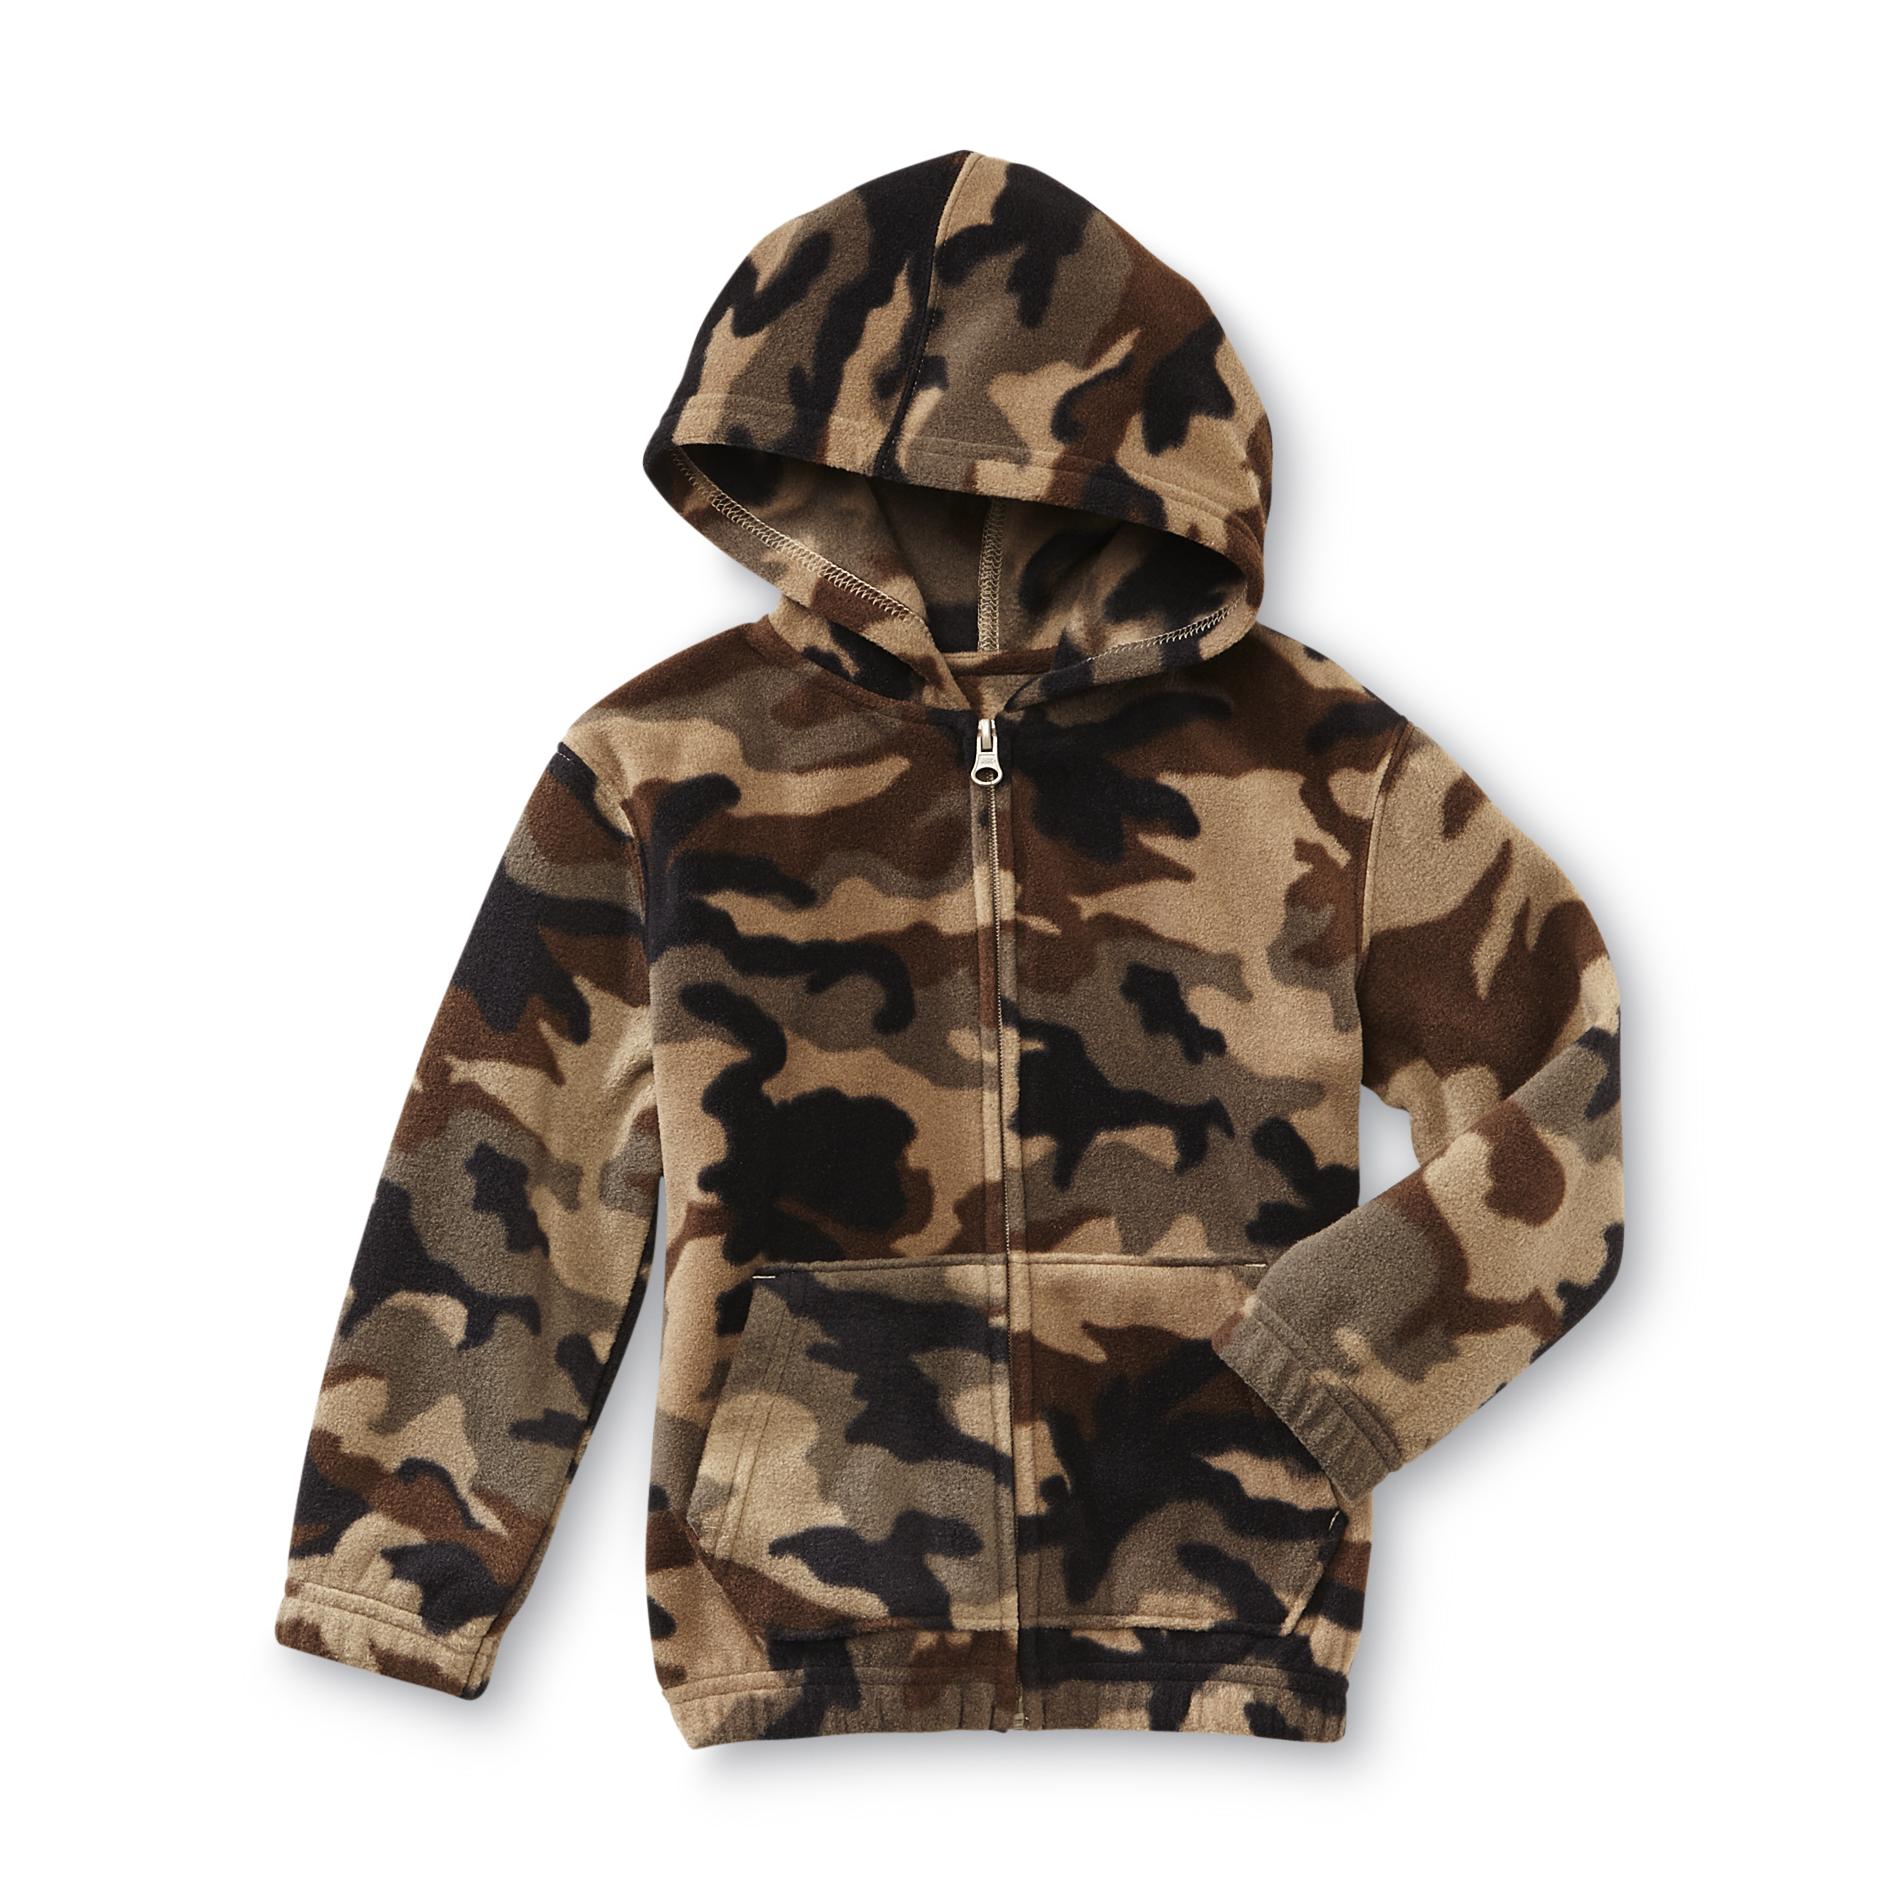 Toughskins Infant & Toddler Boy's Hoodie Jacket - Camouflage